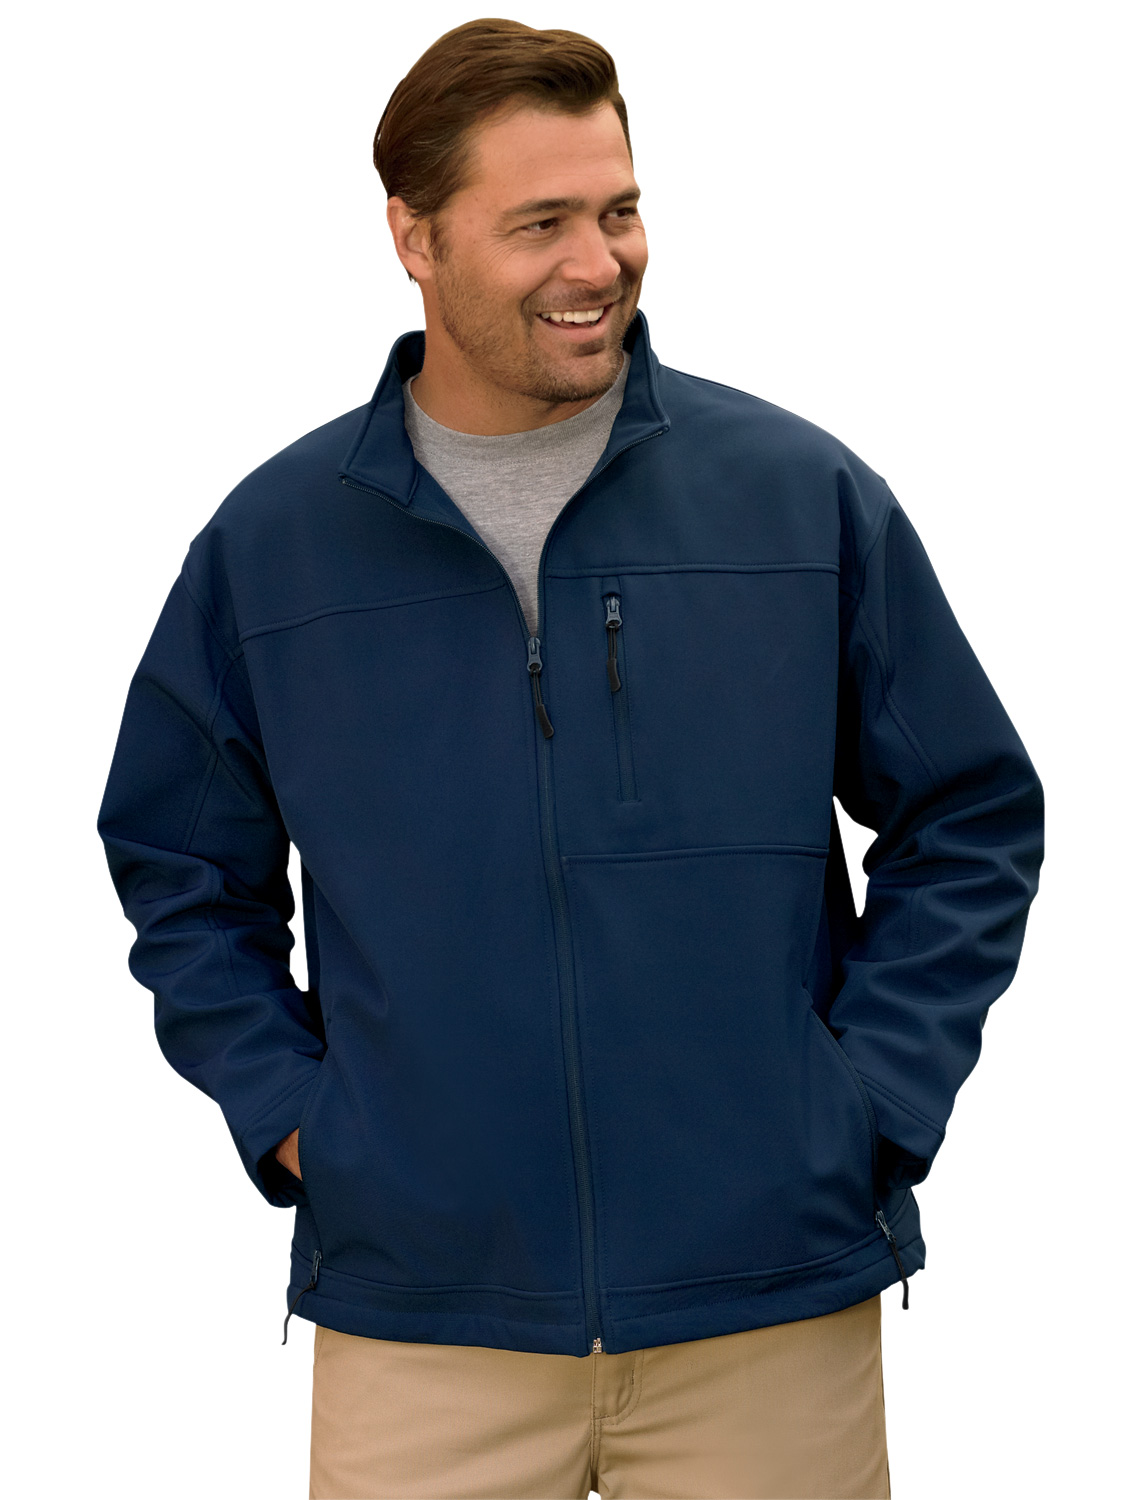 Harbor Bay Classic Bonded Fleece Jacket